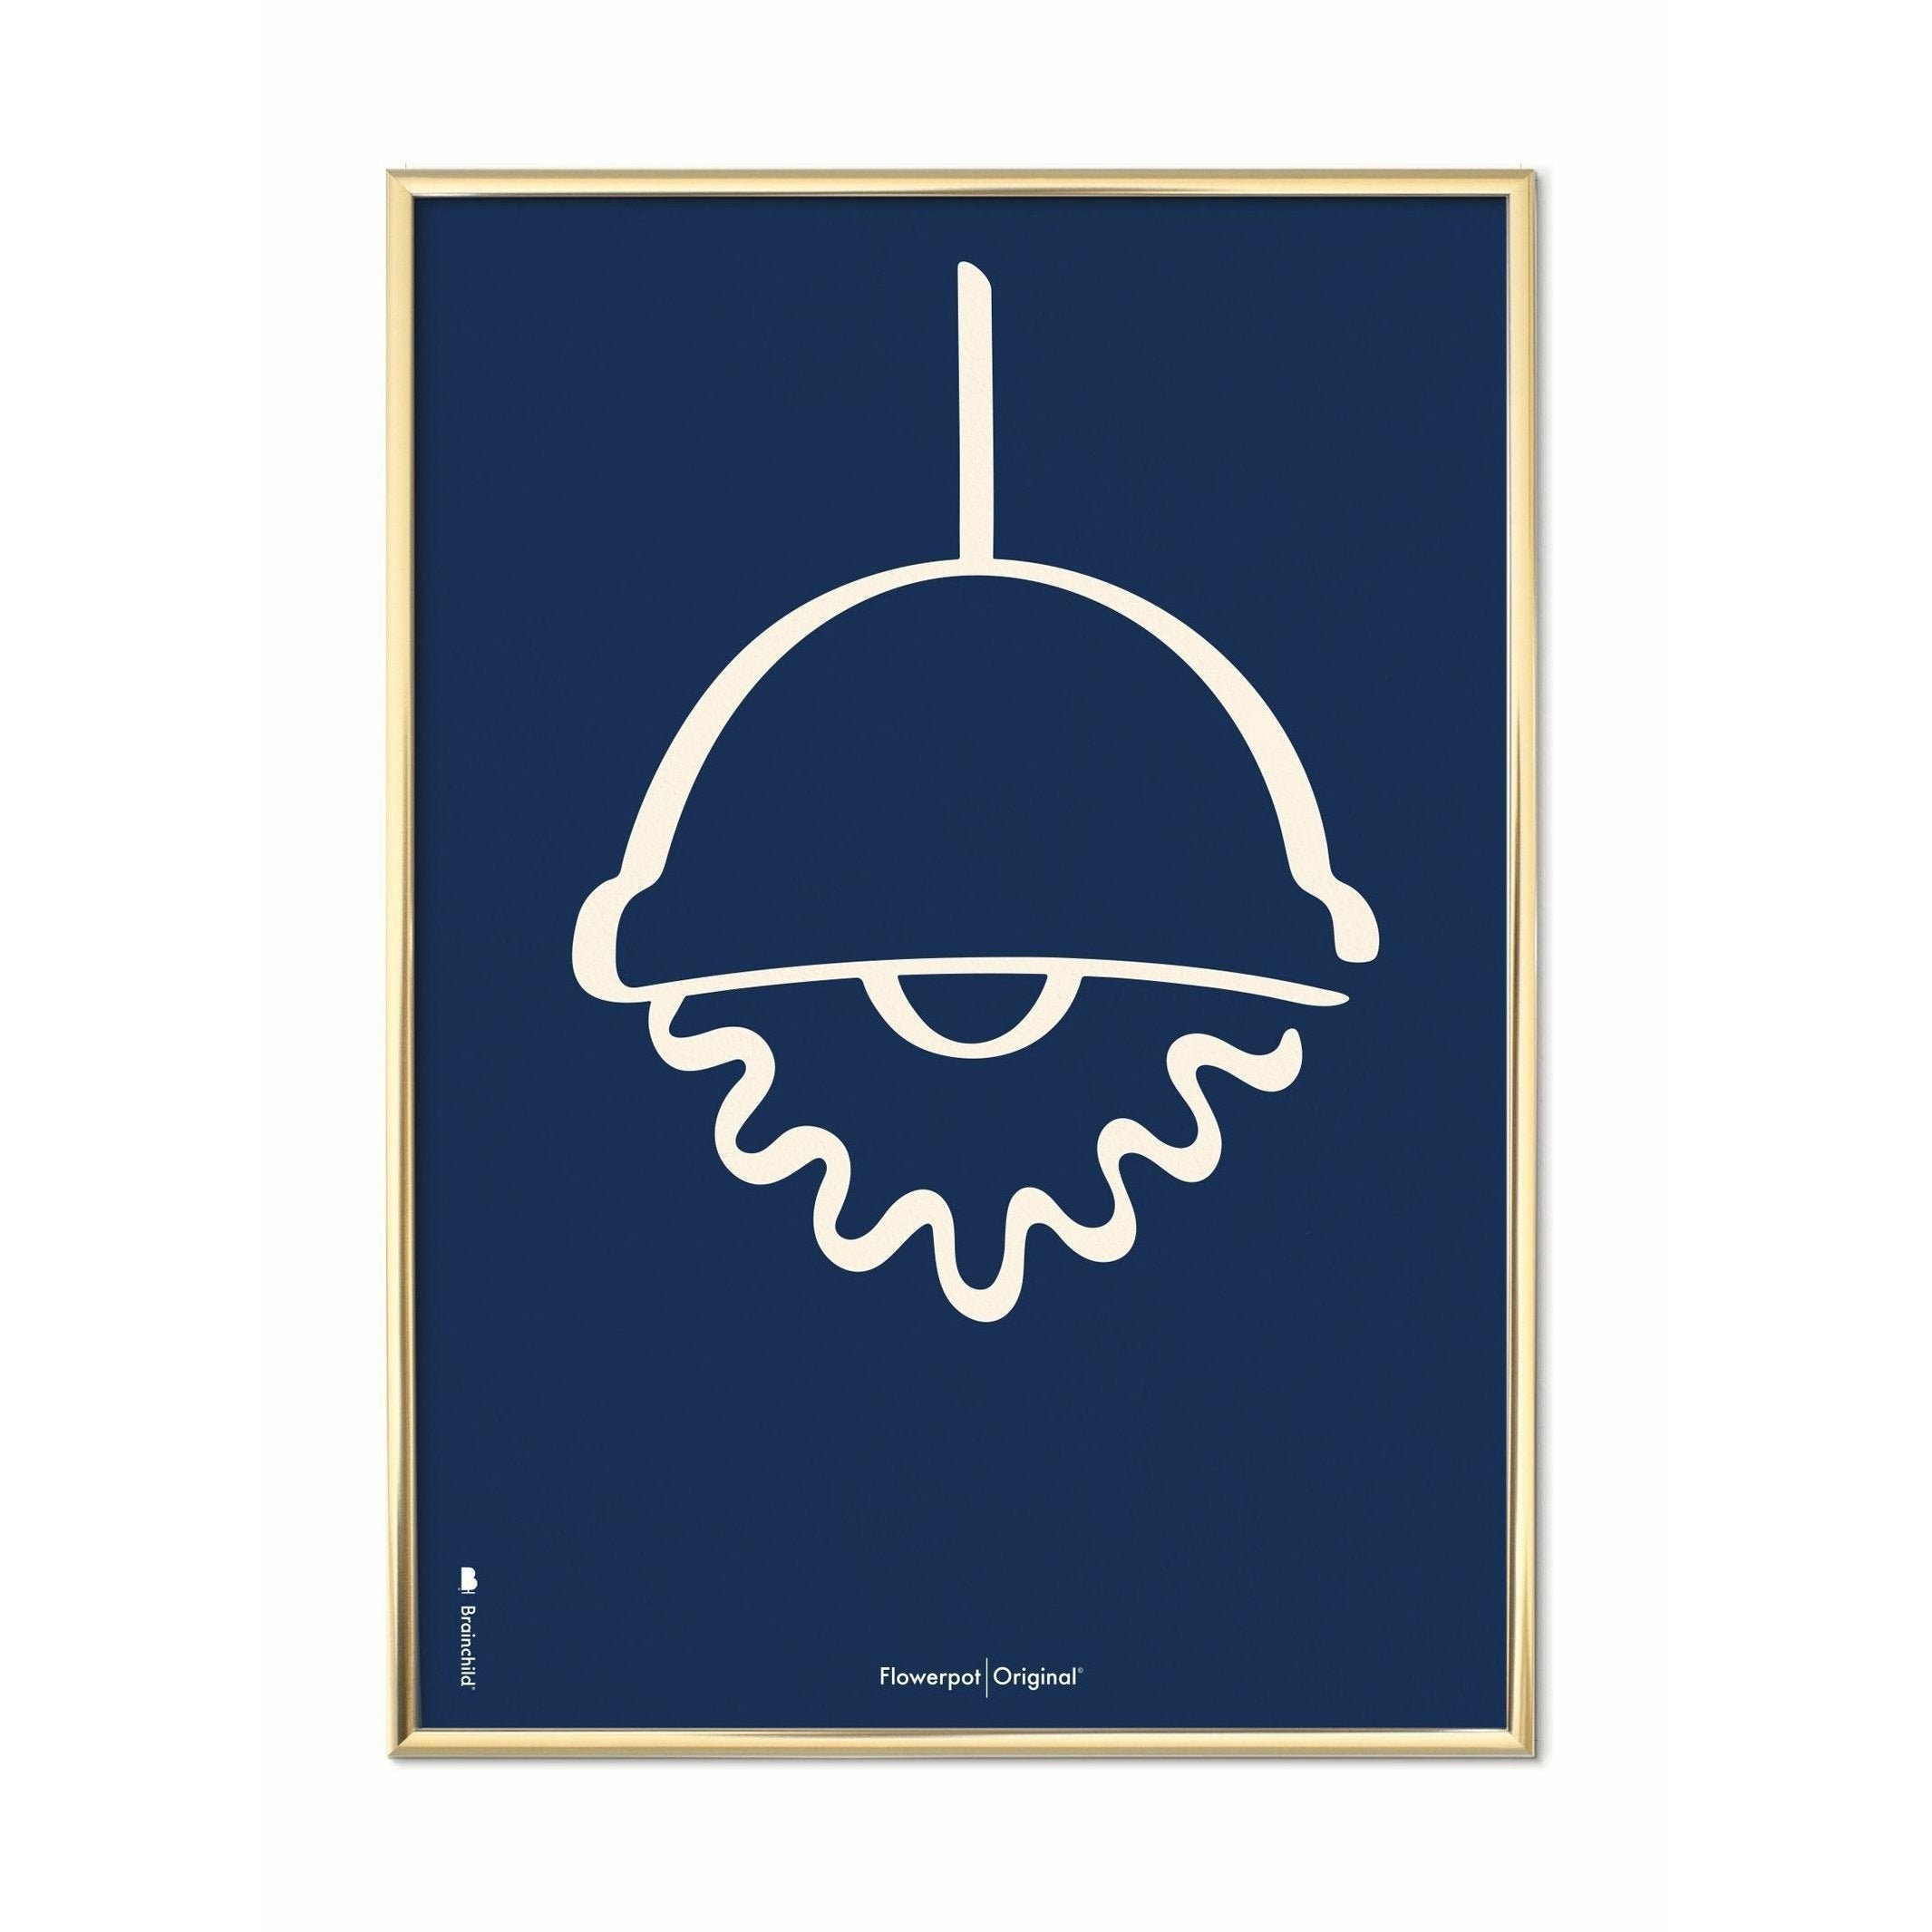 Brainchild Flowerpot Line Poster, Brass Colored Frame A5, Blue Background